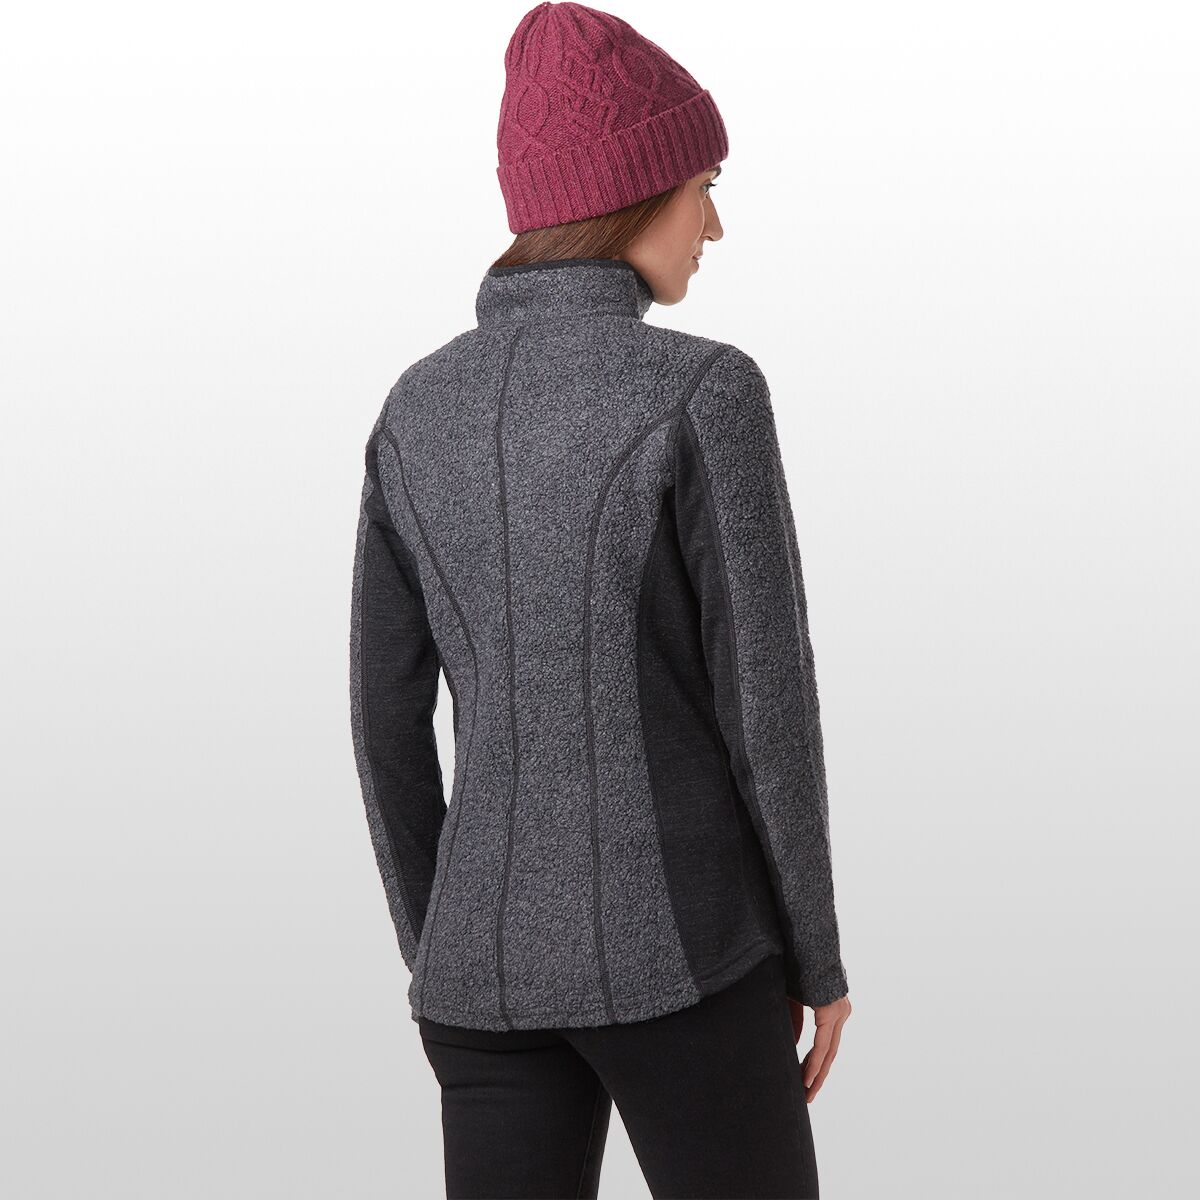 The Kuhl Kozet gray full zip jacket size medium